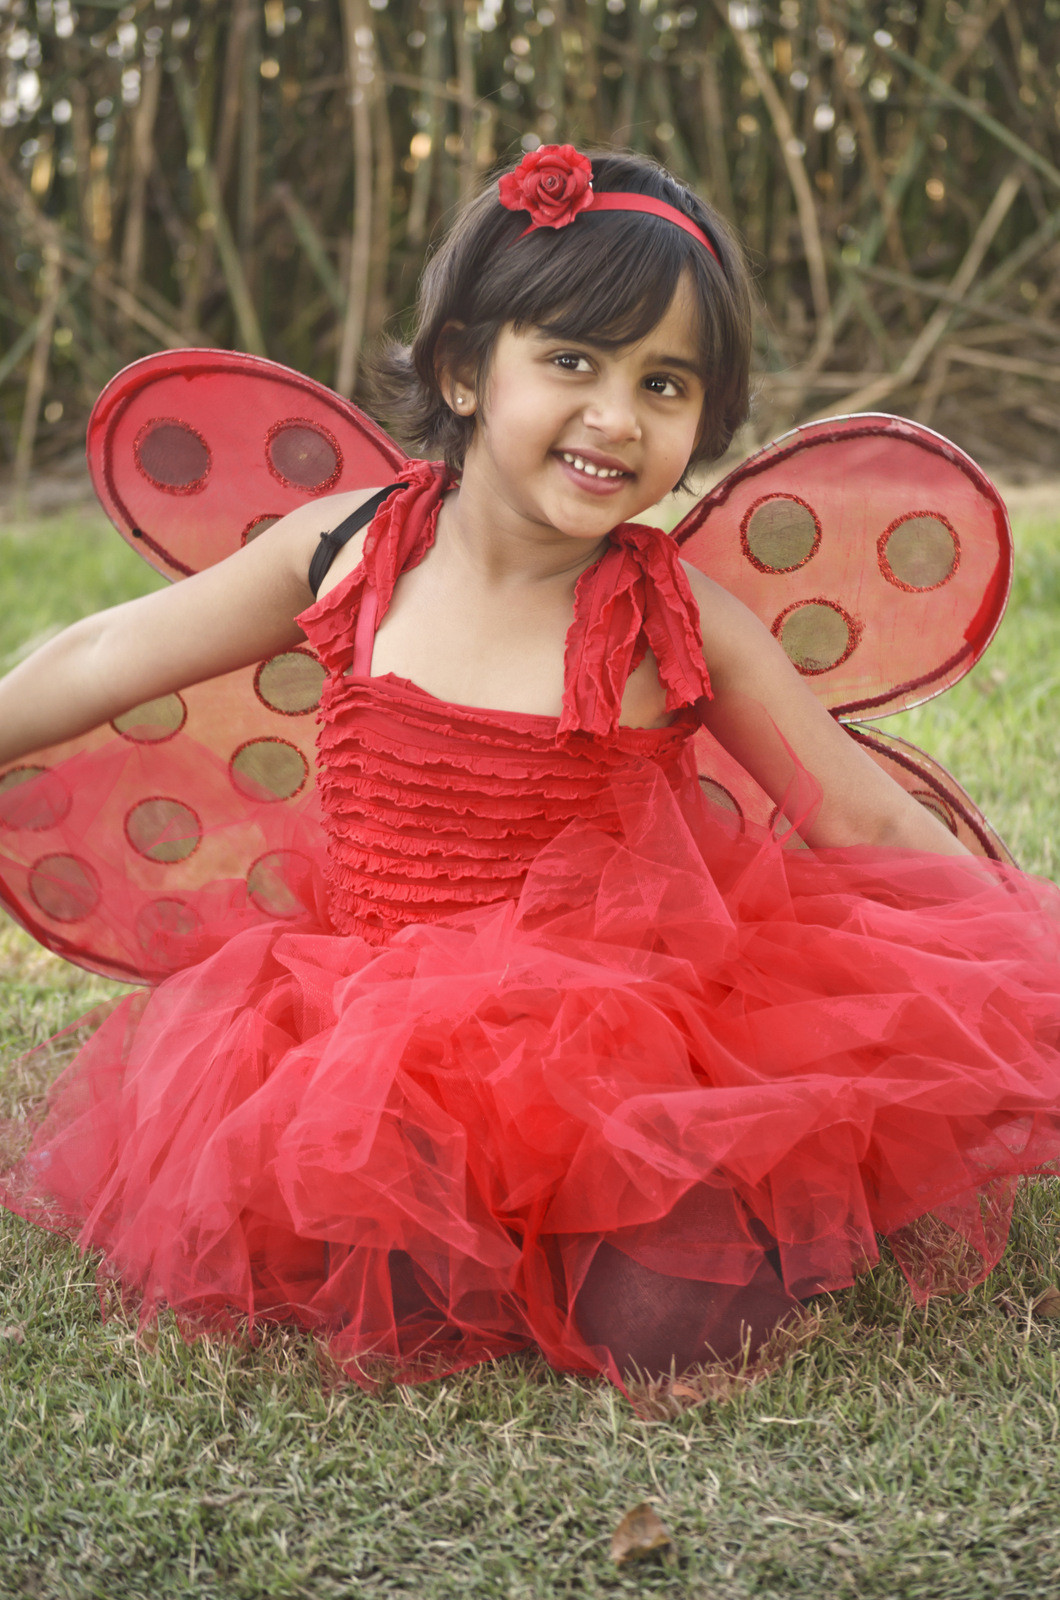 Best ideas about Ladybug Costume DIY
. Save or Pin ladybug costume diy Now.